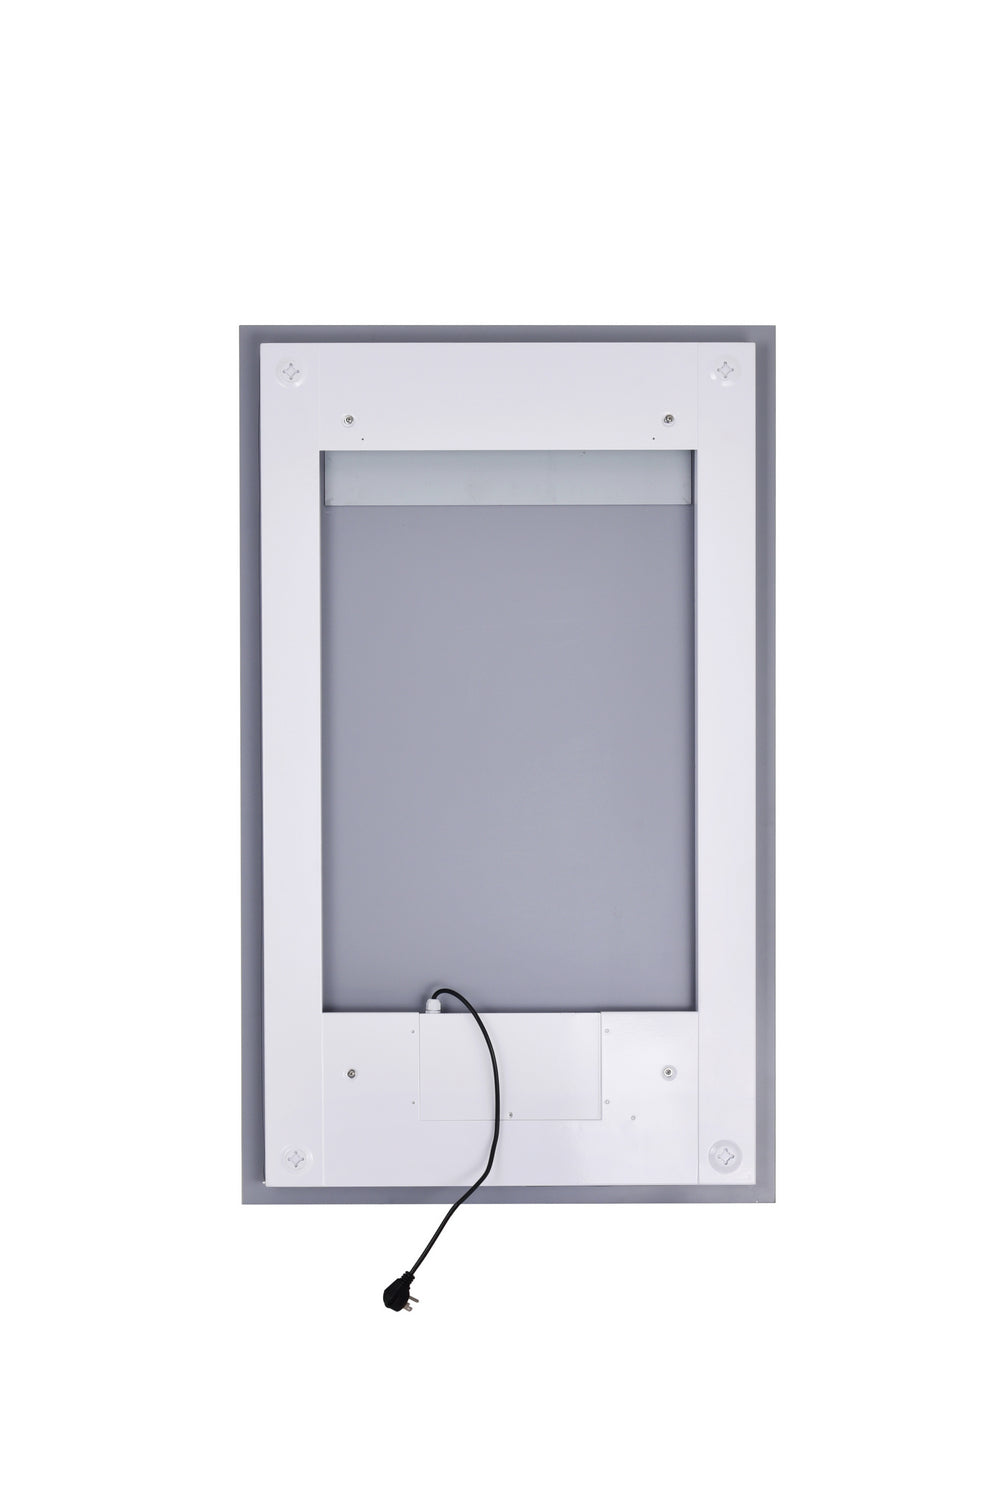 CWI Lighting - 1233W30-49 - LED Mirror - Abigail - White